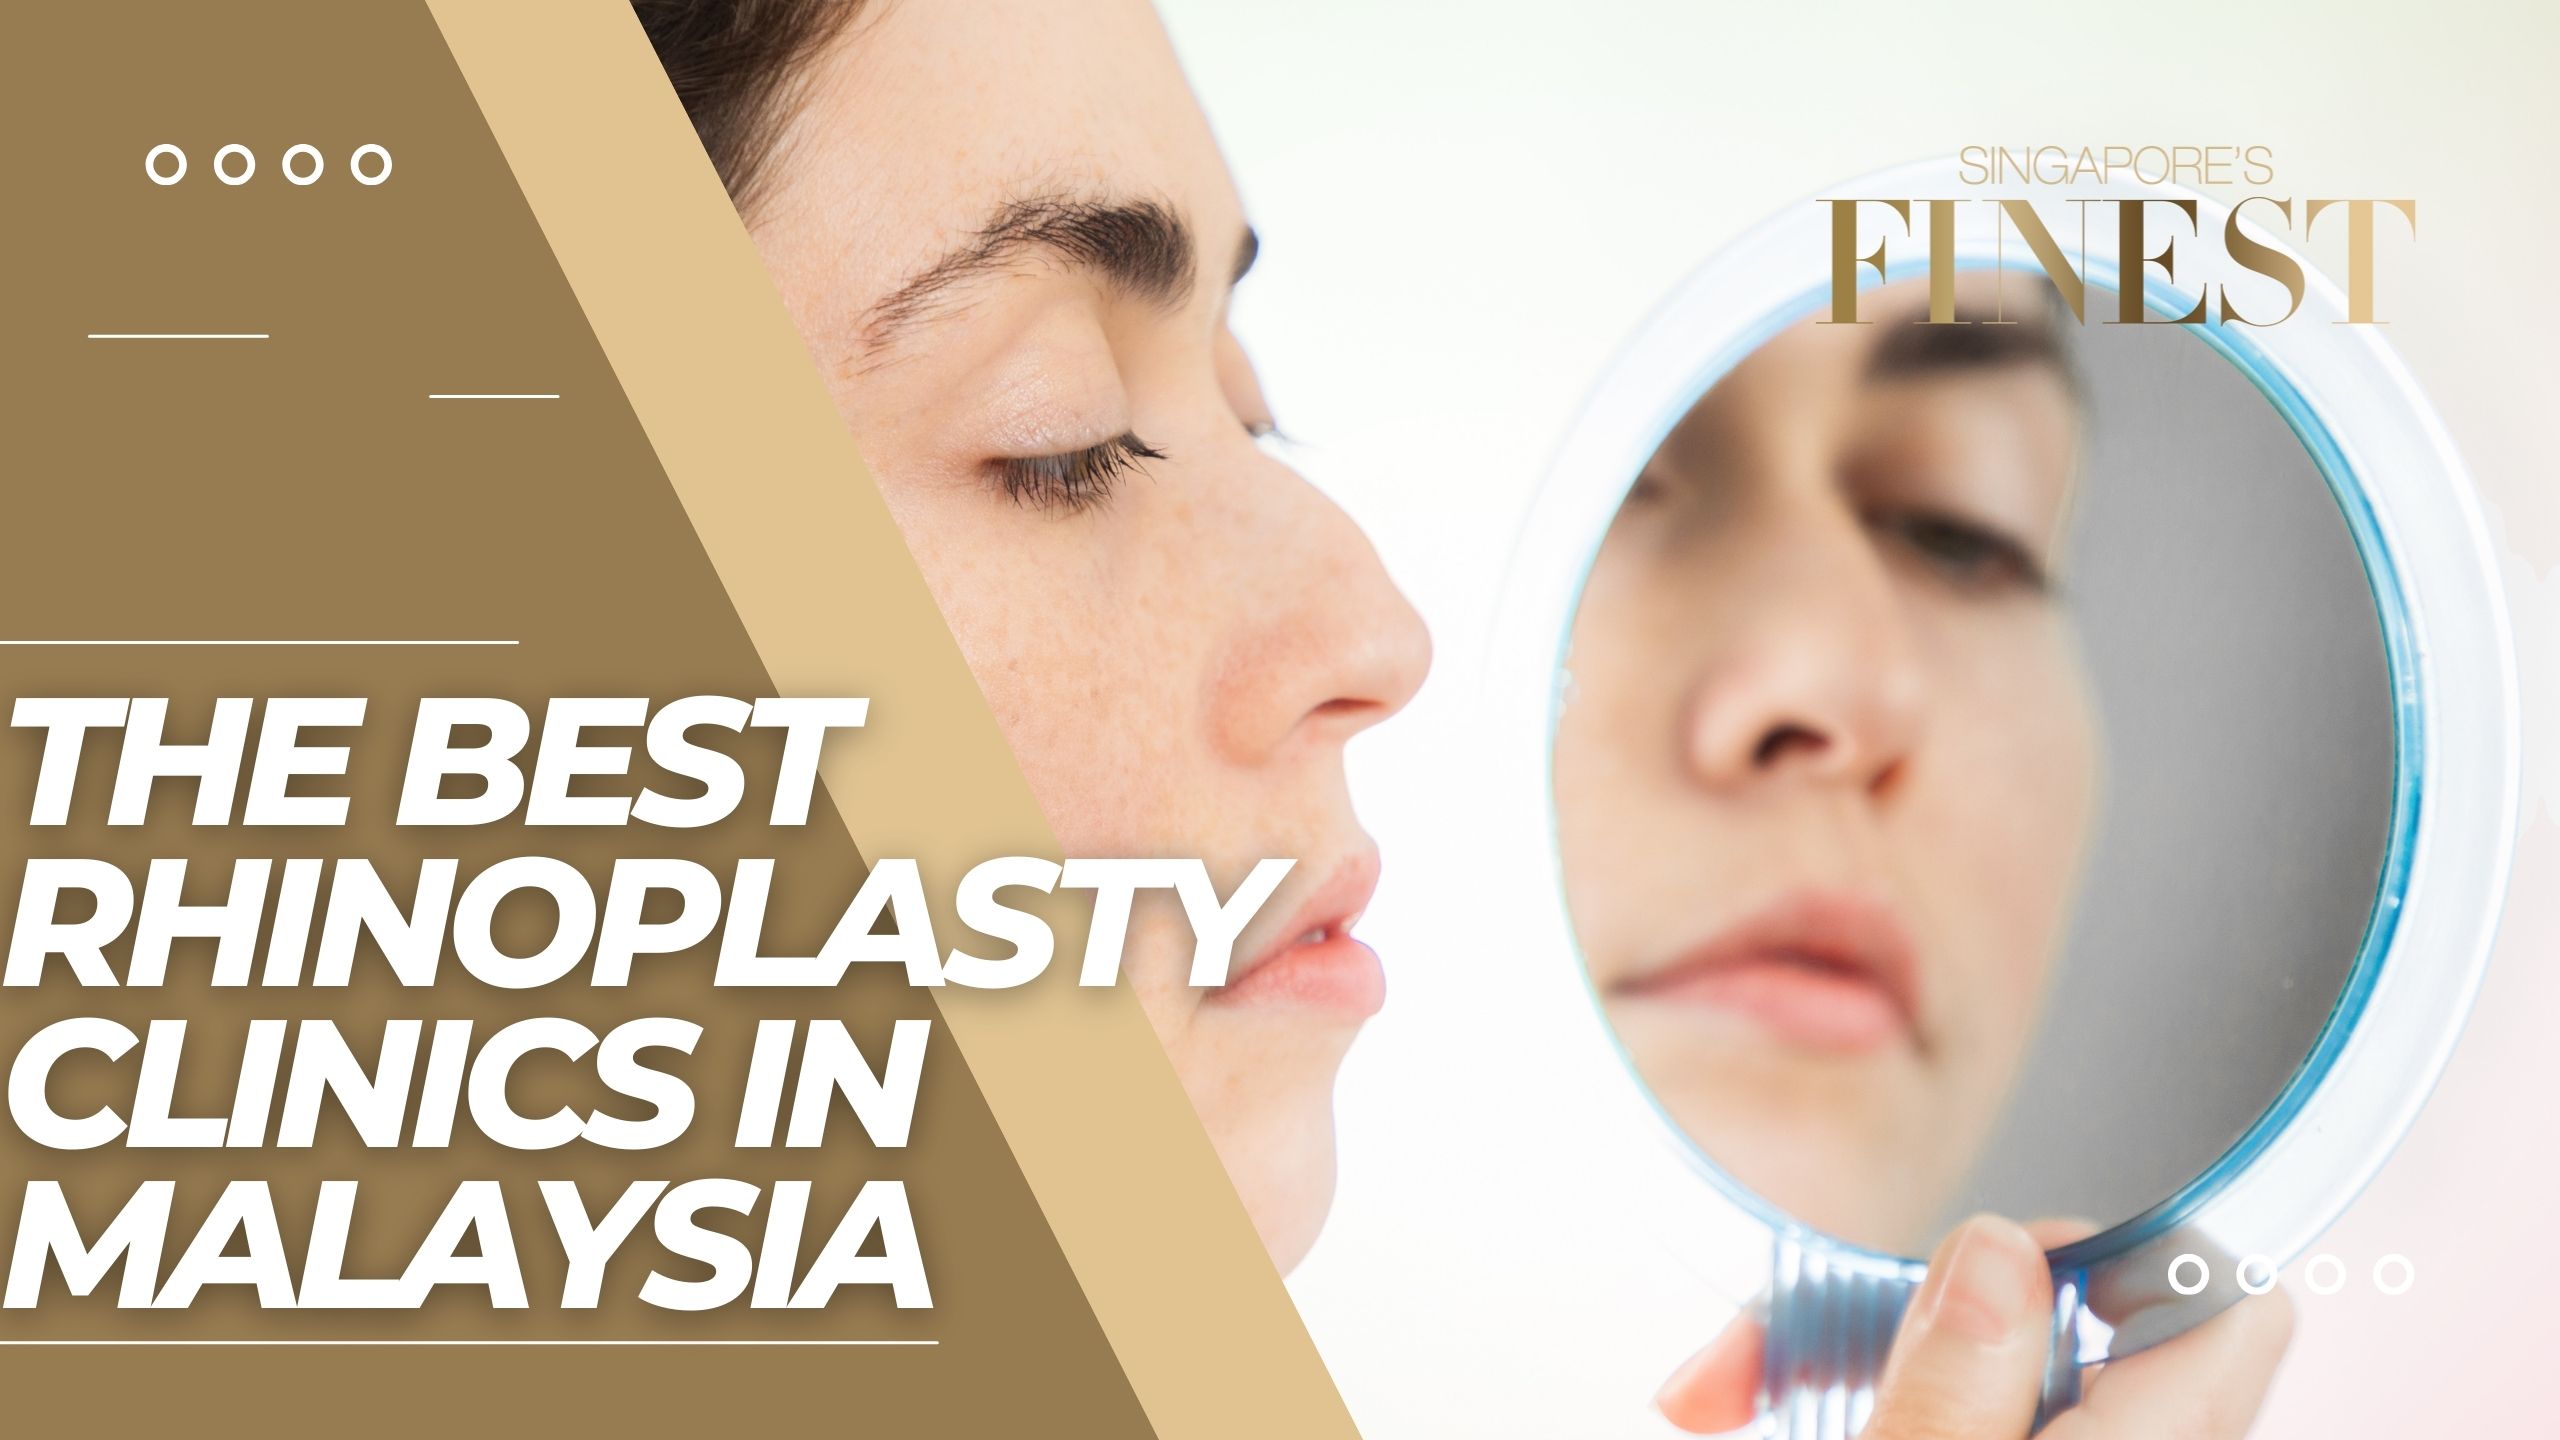 The Finest Rhinoplasty Clinics in Malaysia